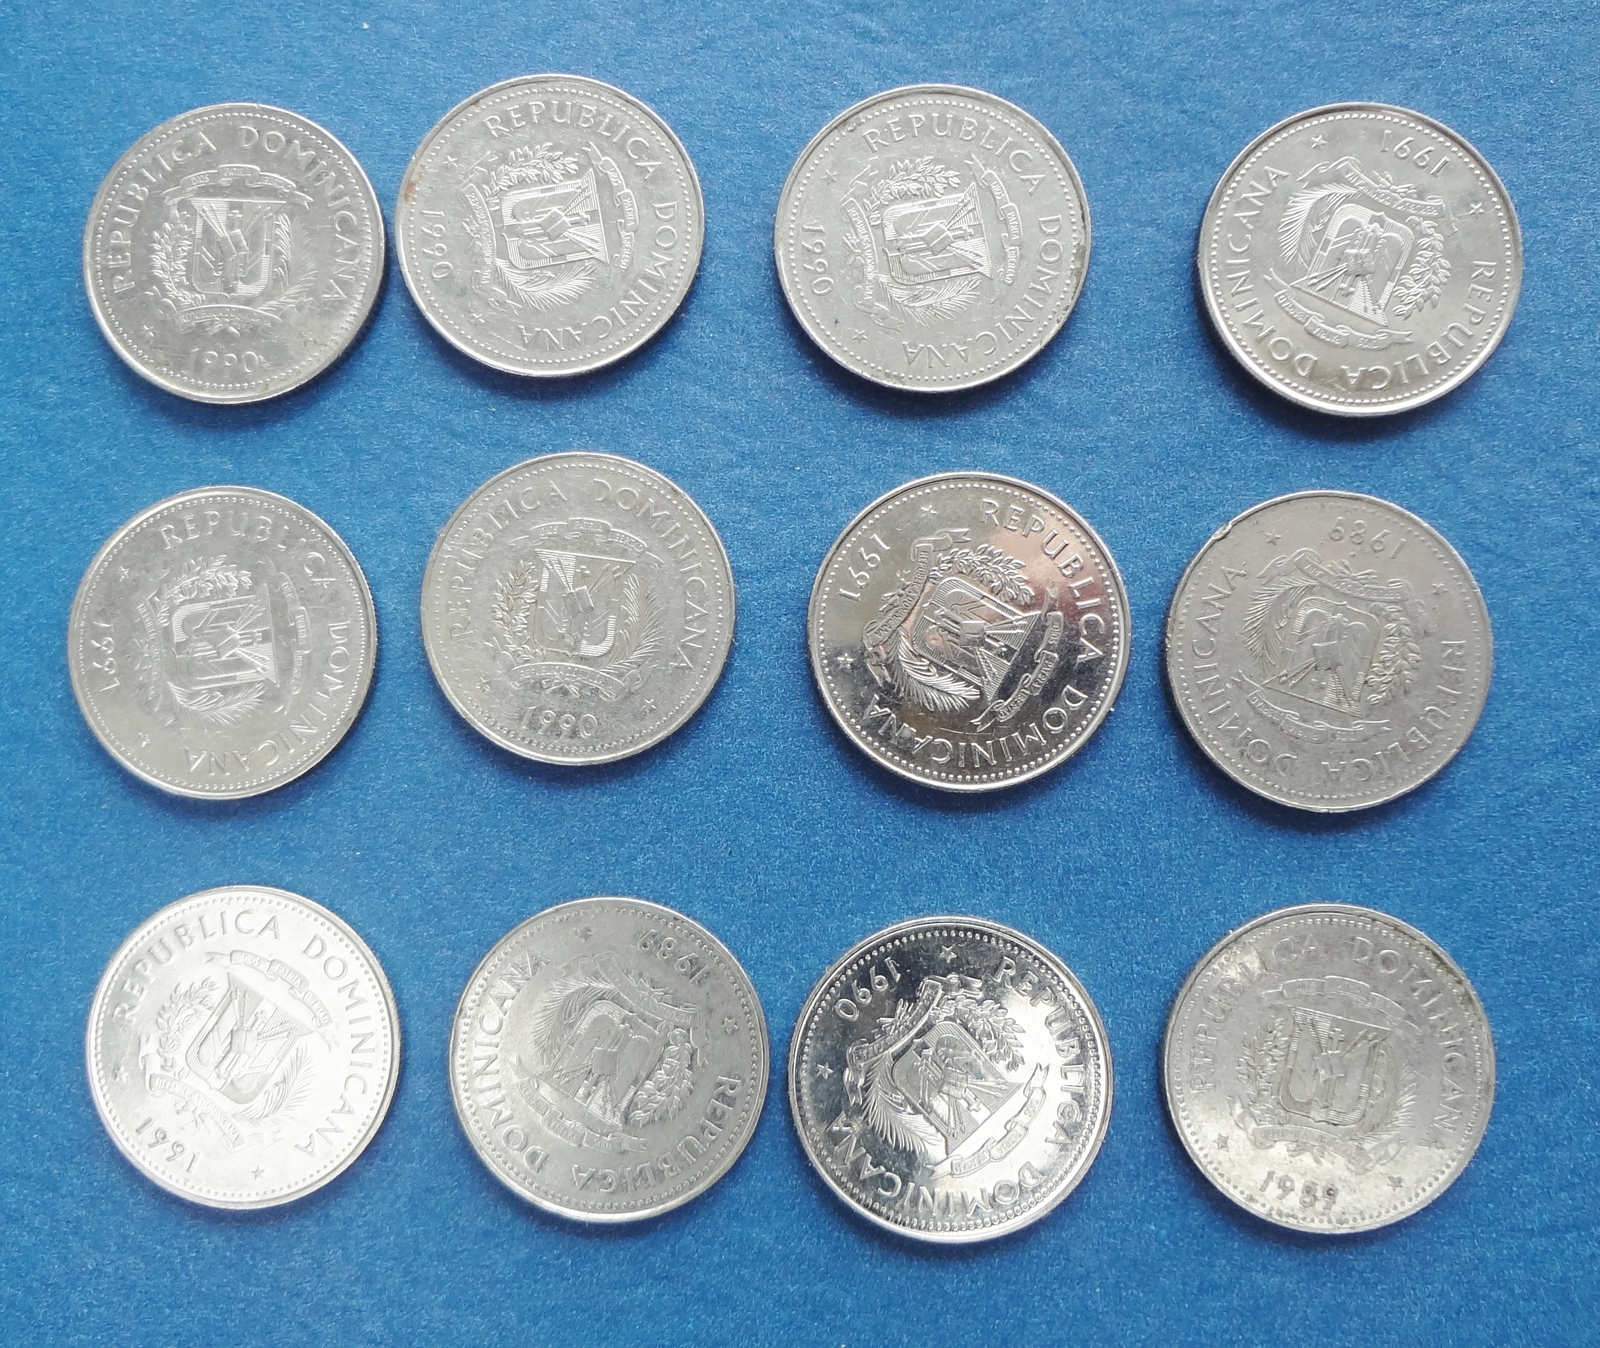 Primary image for Lot of 12 Dominican Republic Republica Dominicana Coins Veinticinco 25 Centavos